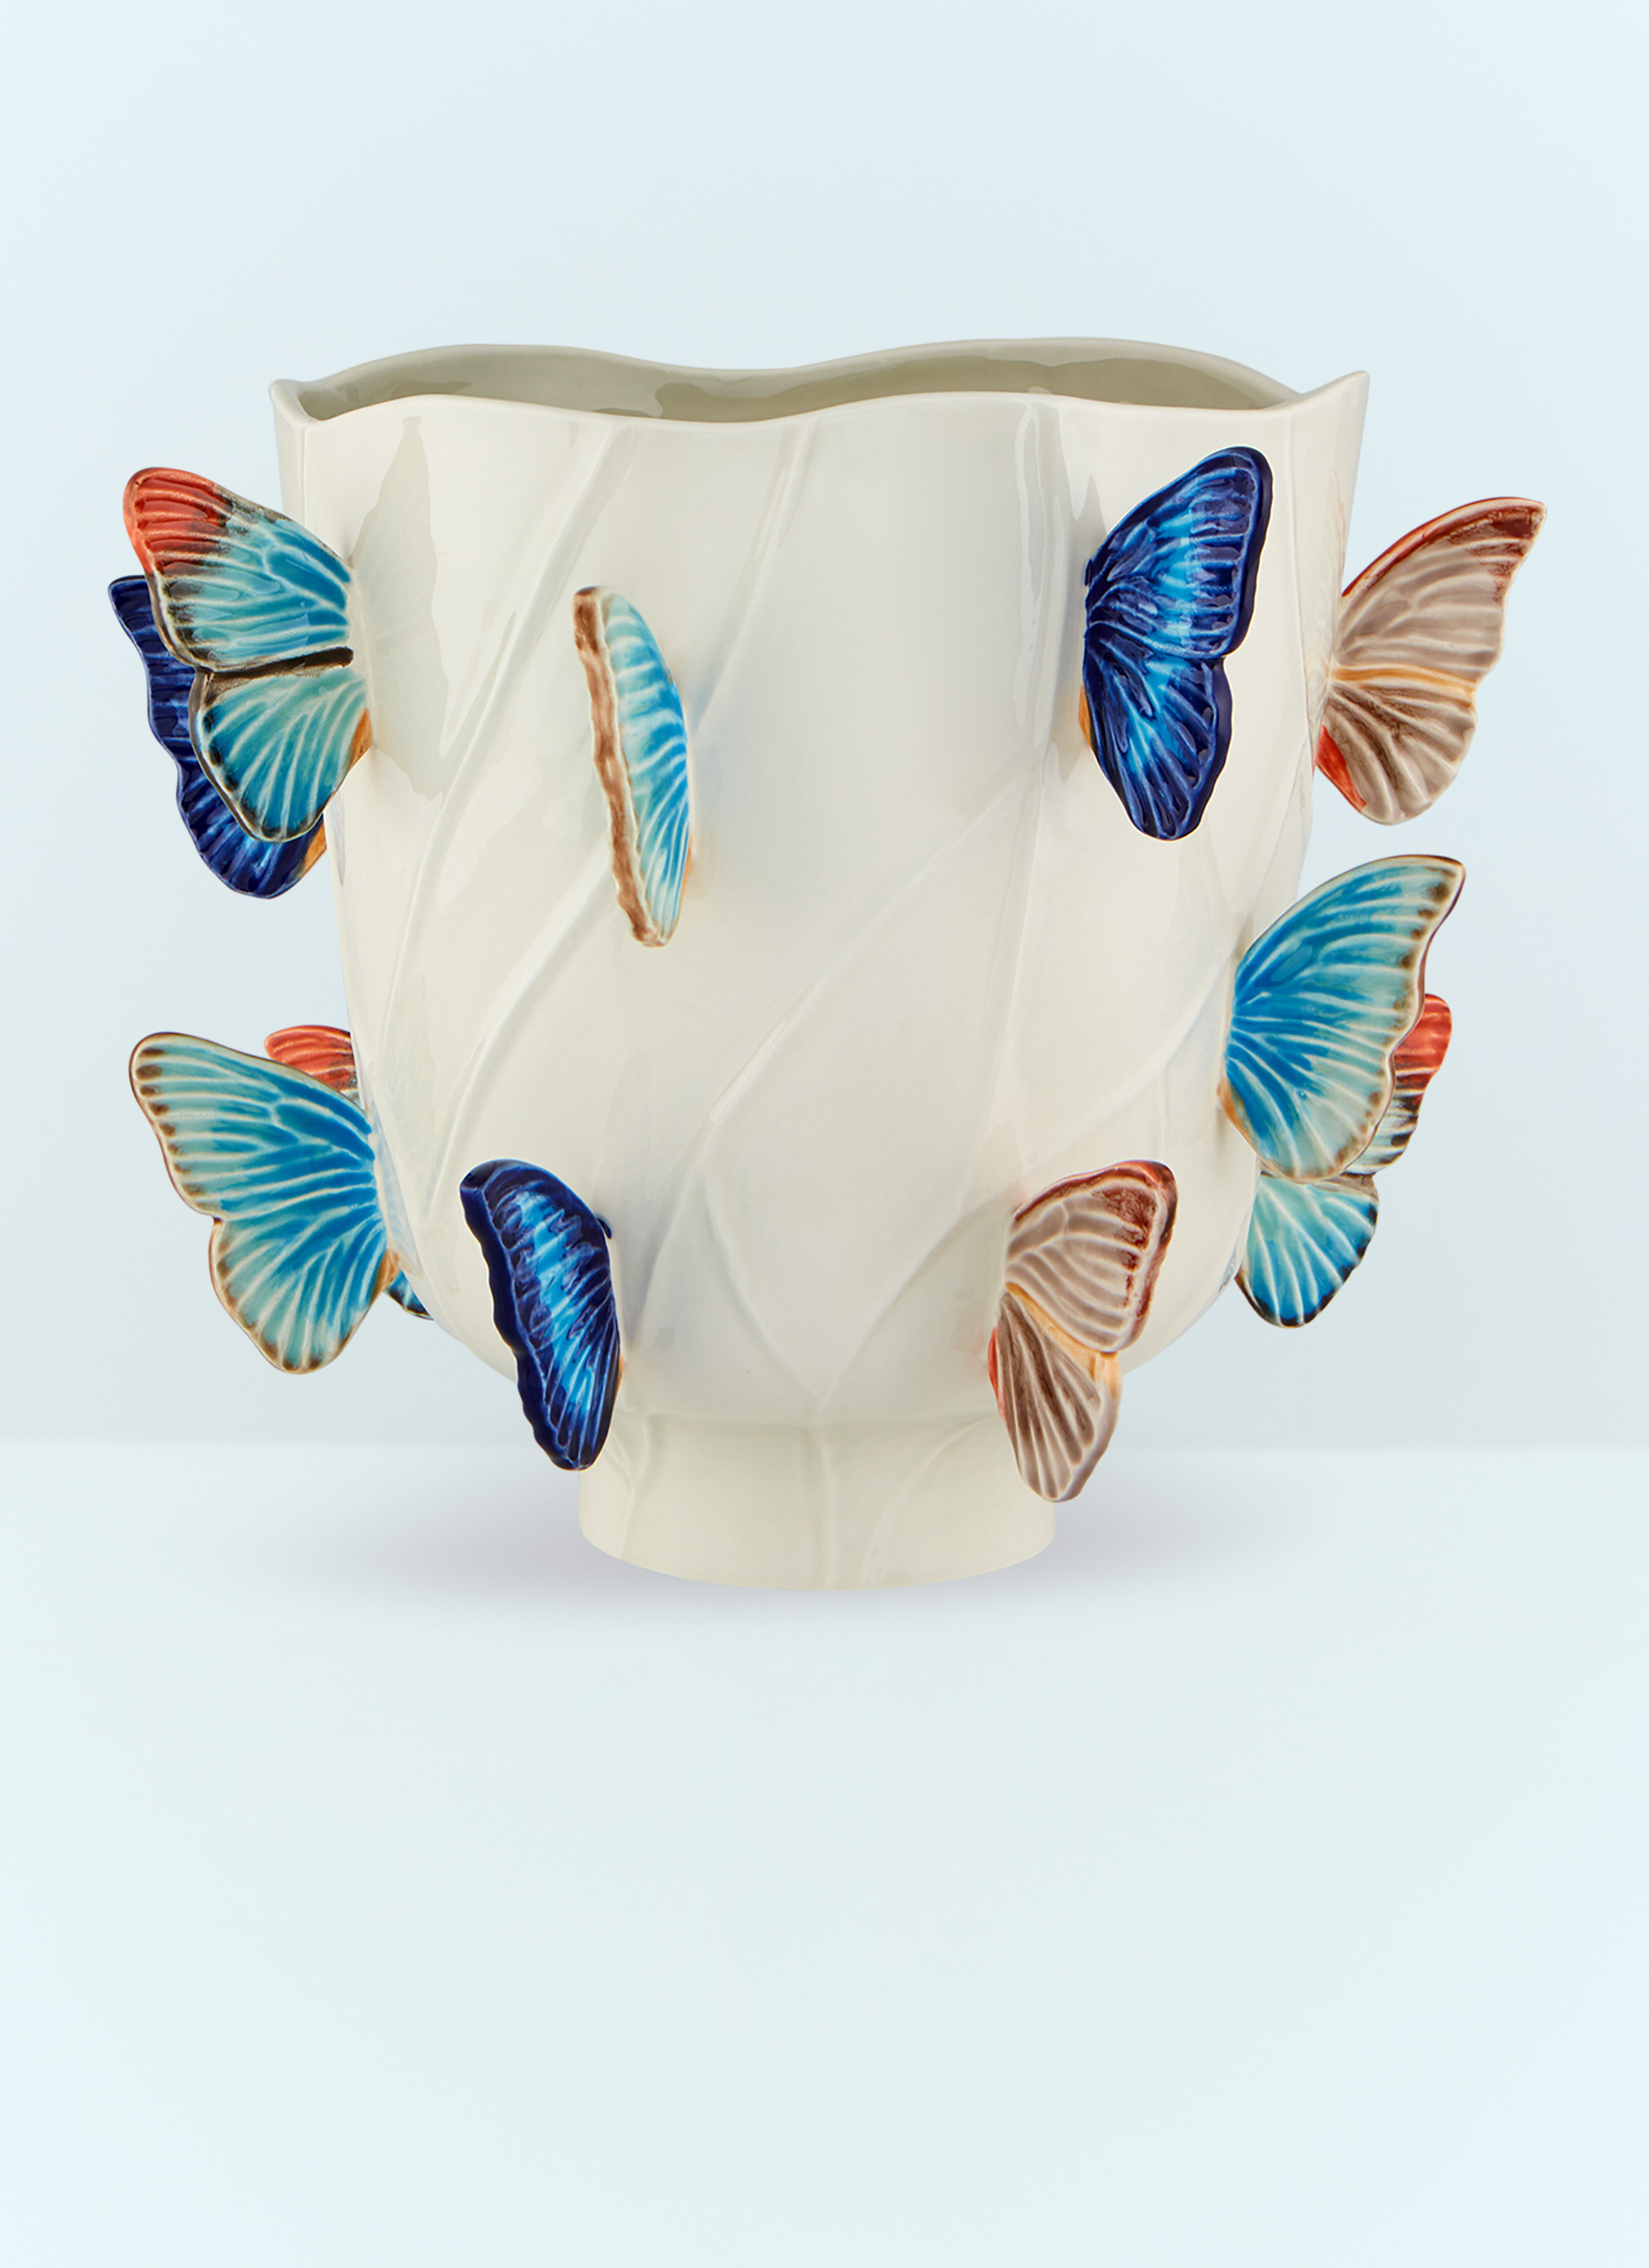 Seletti Cloudy Butterflies Large Vase Multicolour wps0691129